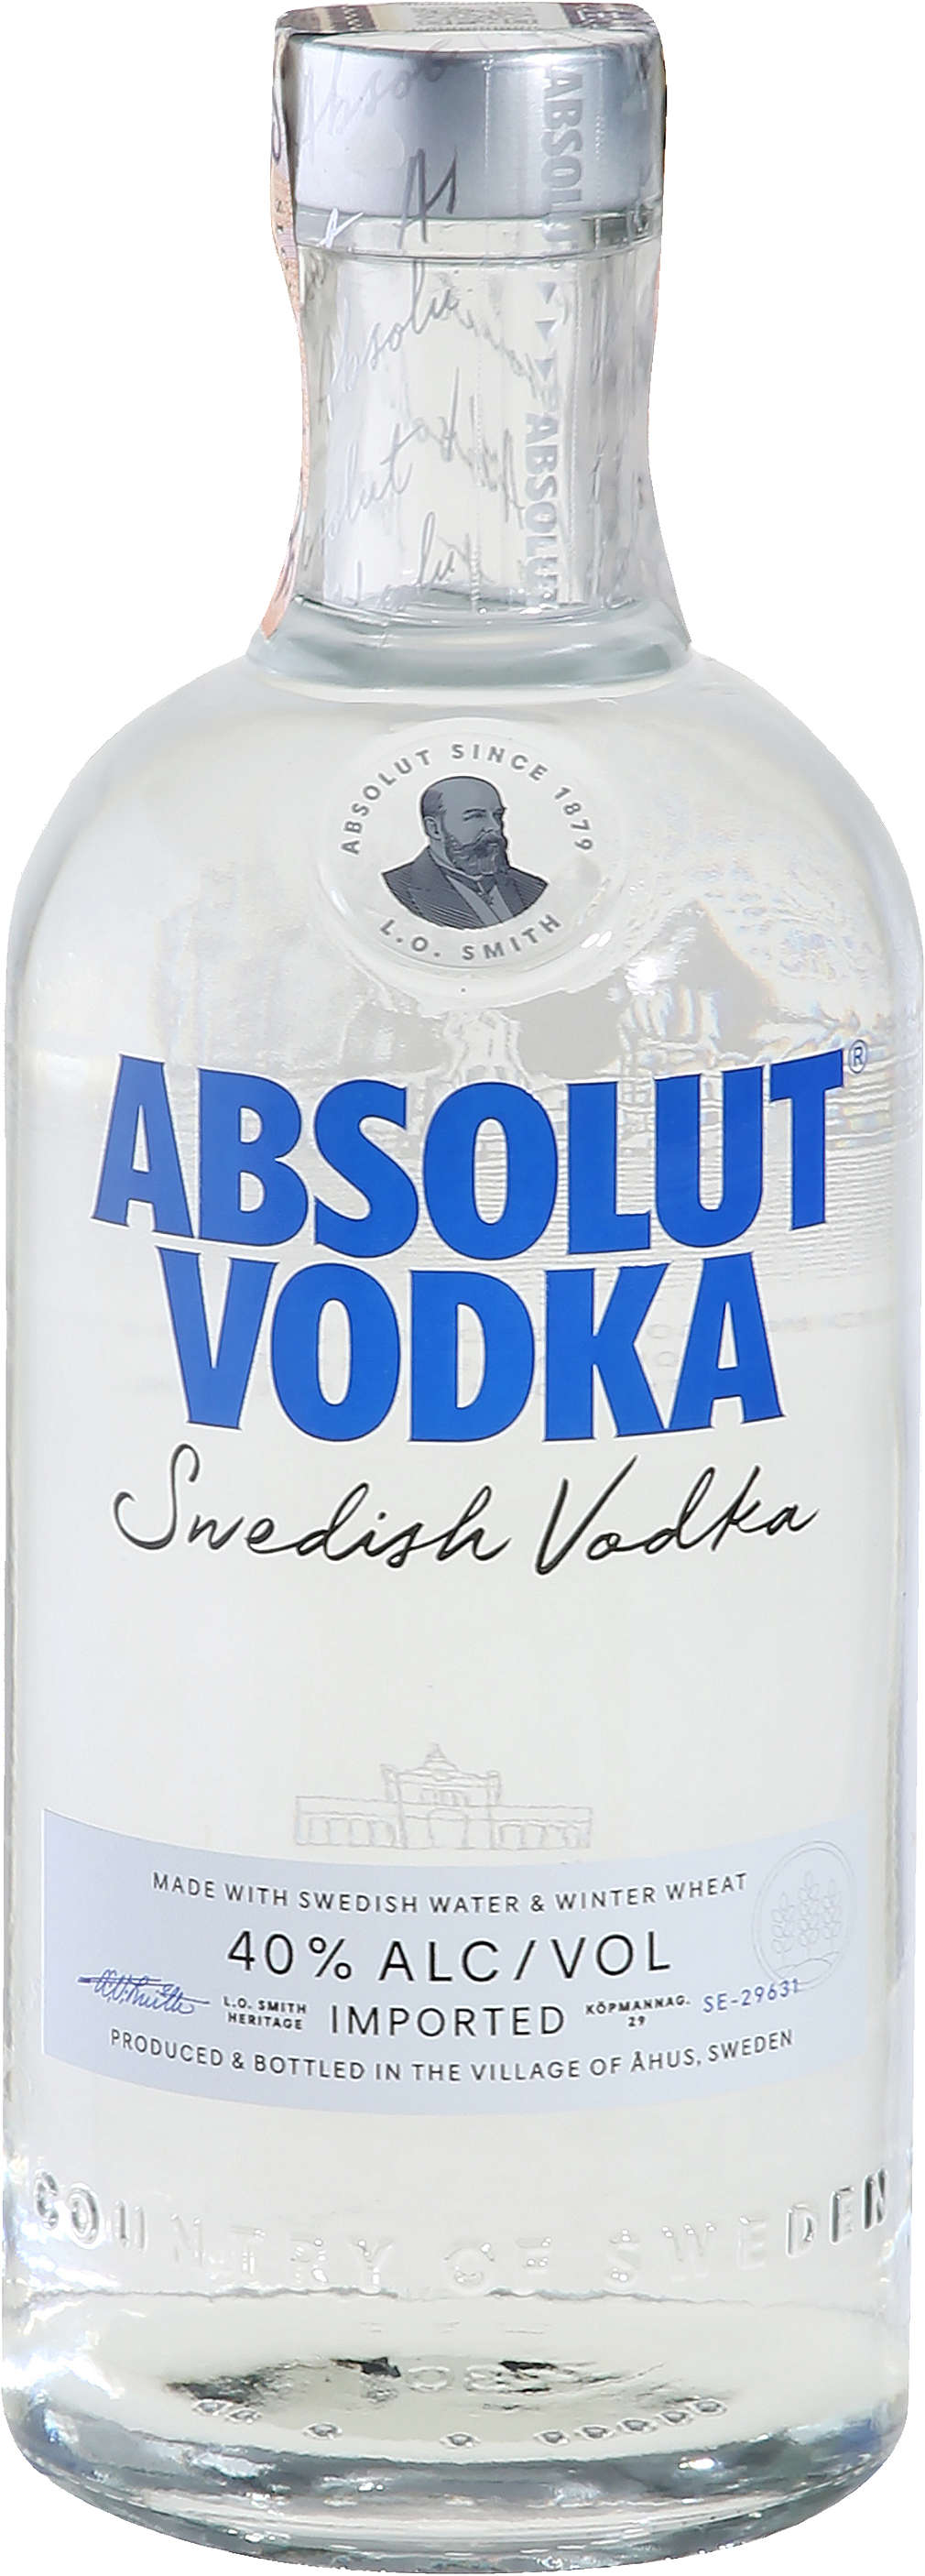 Zobrazenie výrobku Absolut Vodka